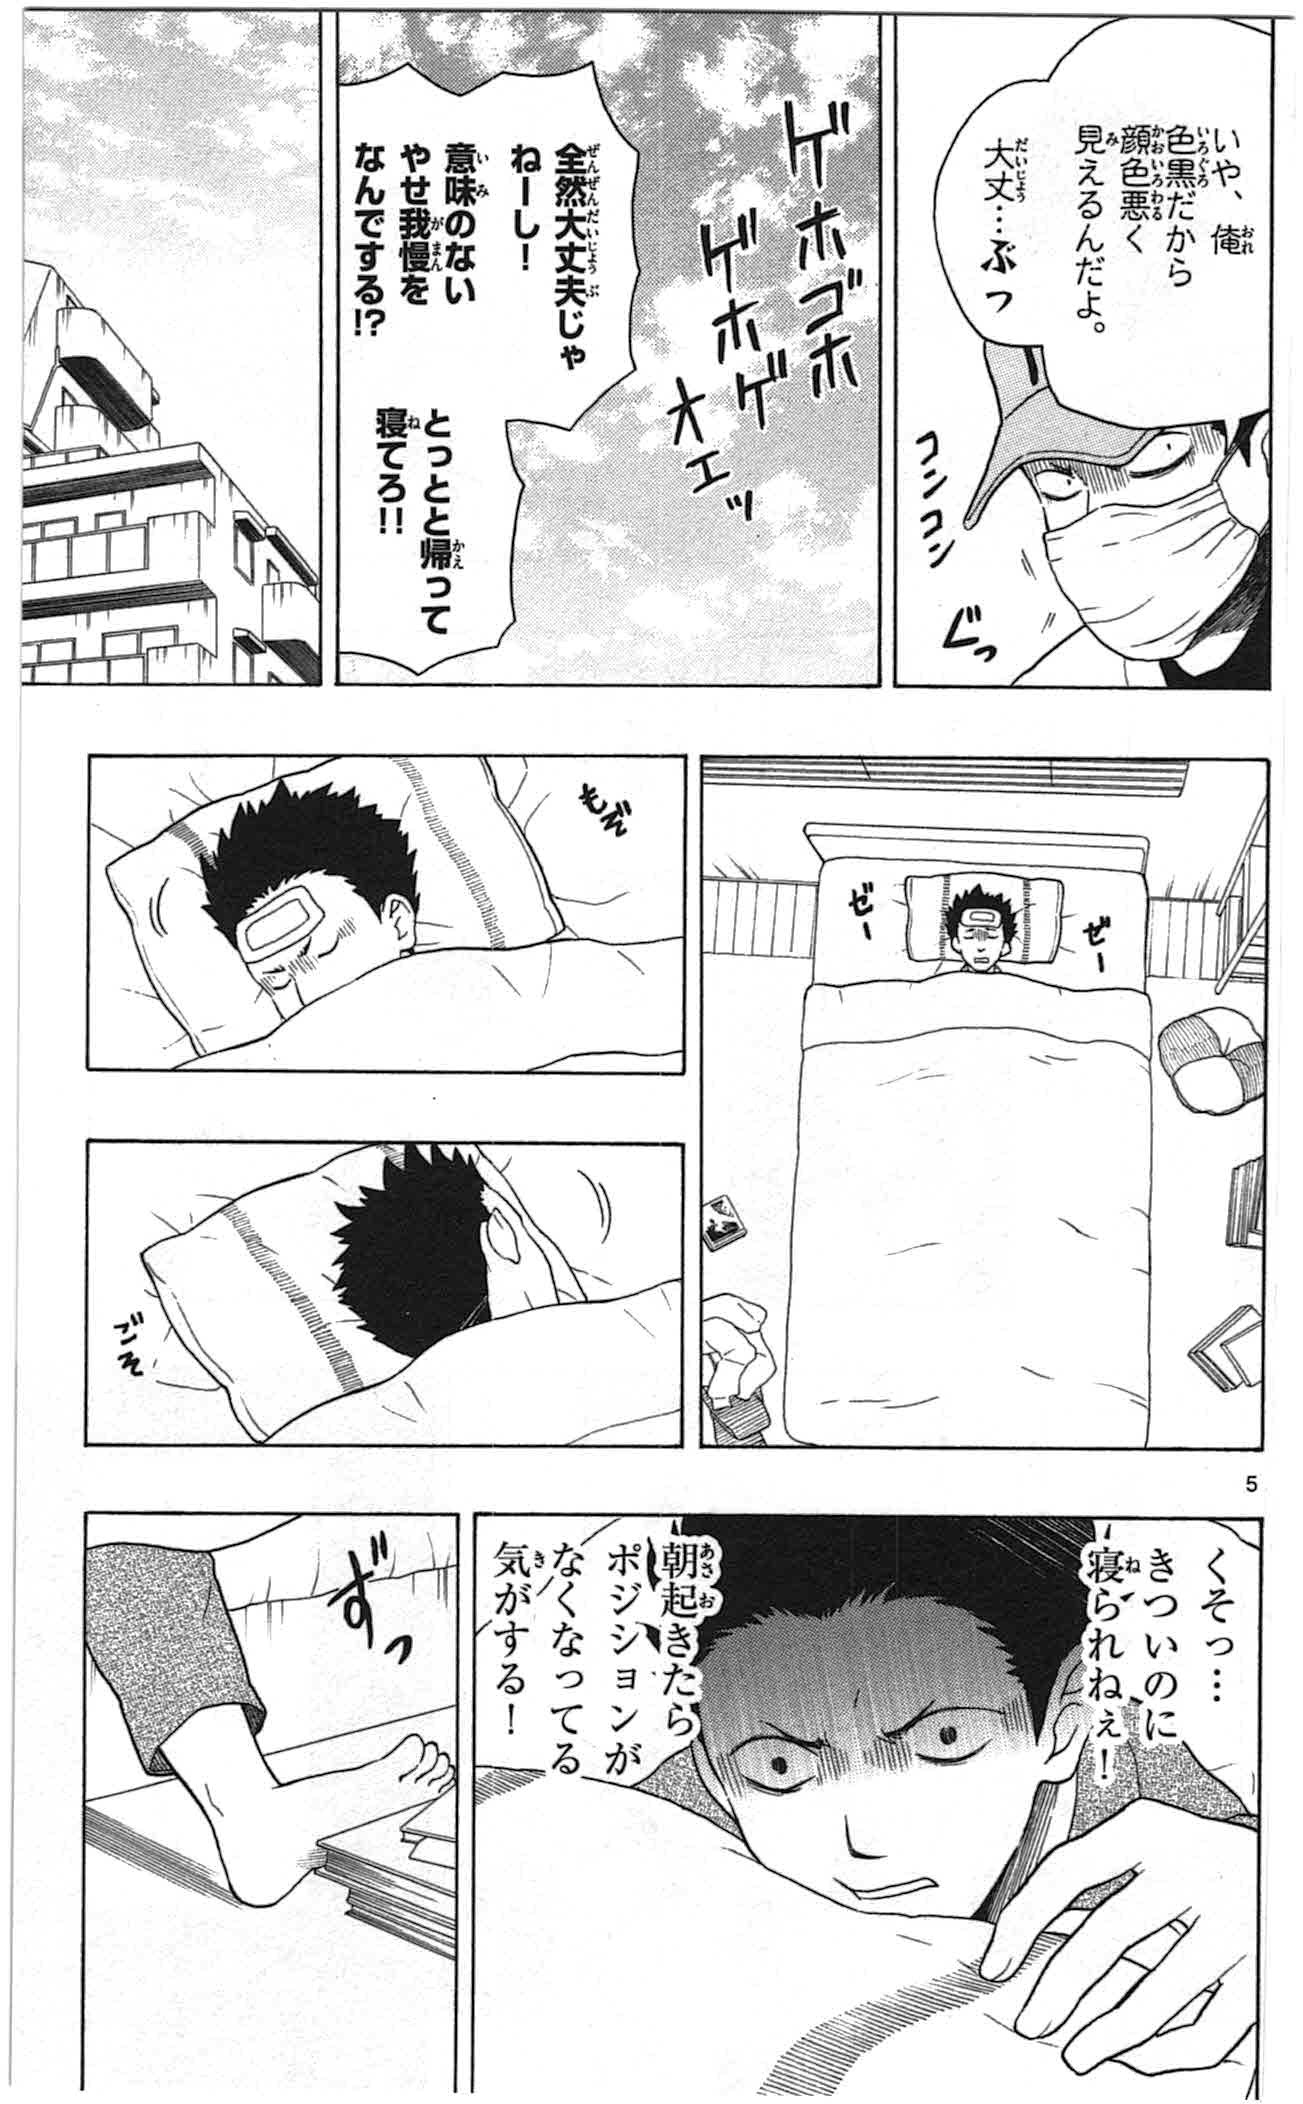 Yugami-kun ni wa Tomodachi ga Inai - Chapter 004 - Page 5